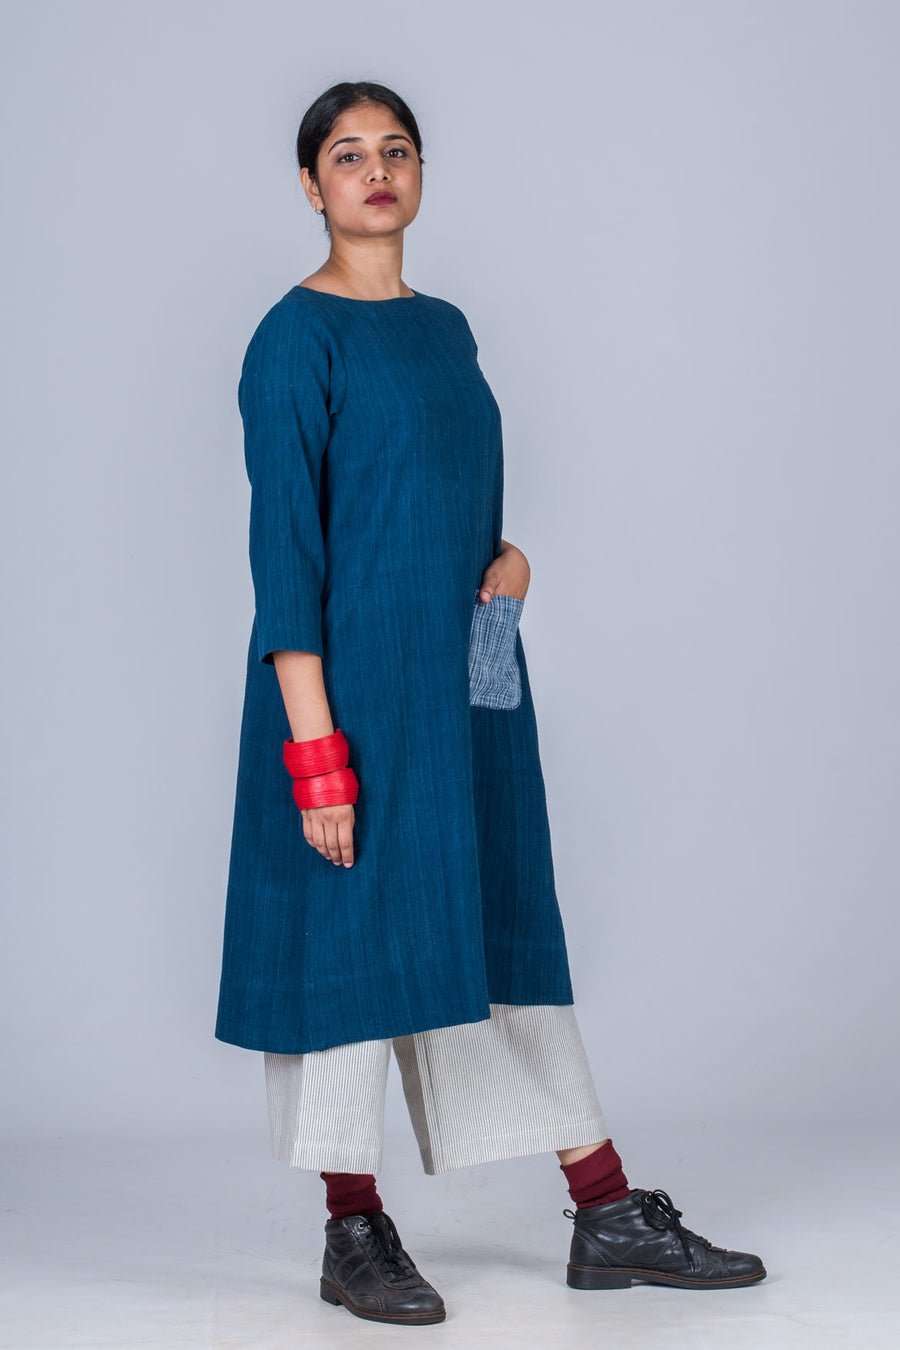 Natural Indigo Khadi Dress - PARINA - Upasana Design Studio